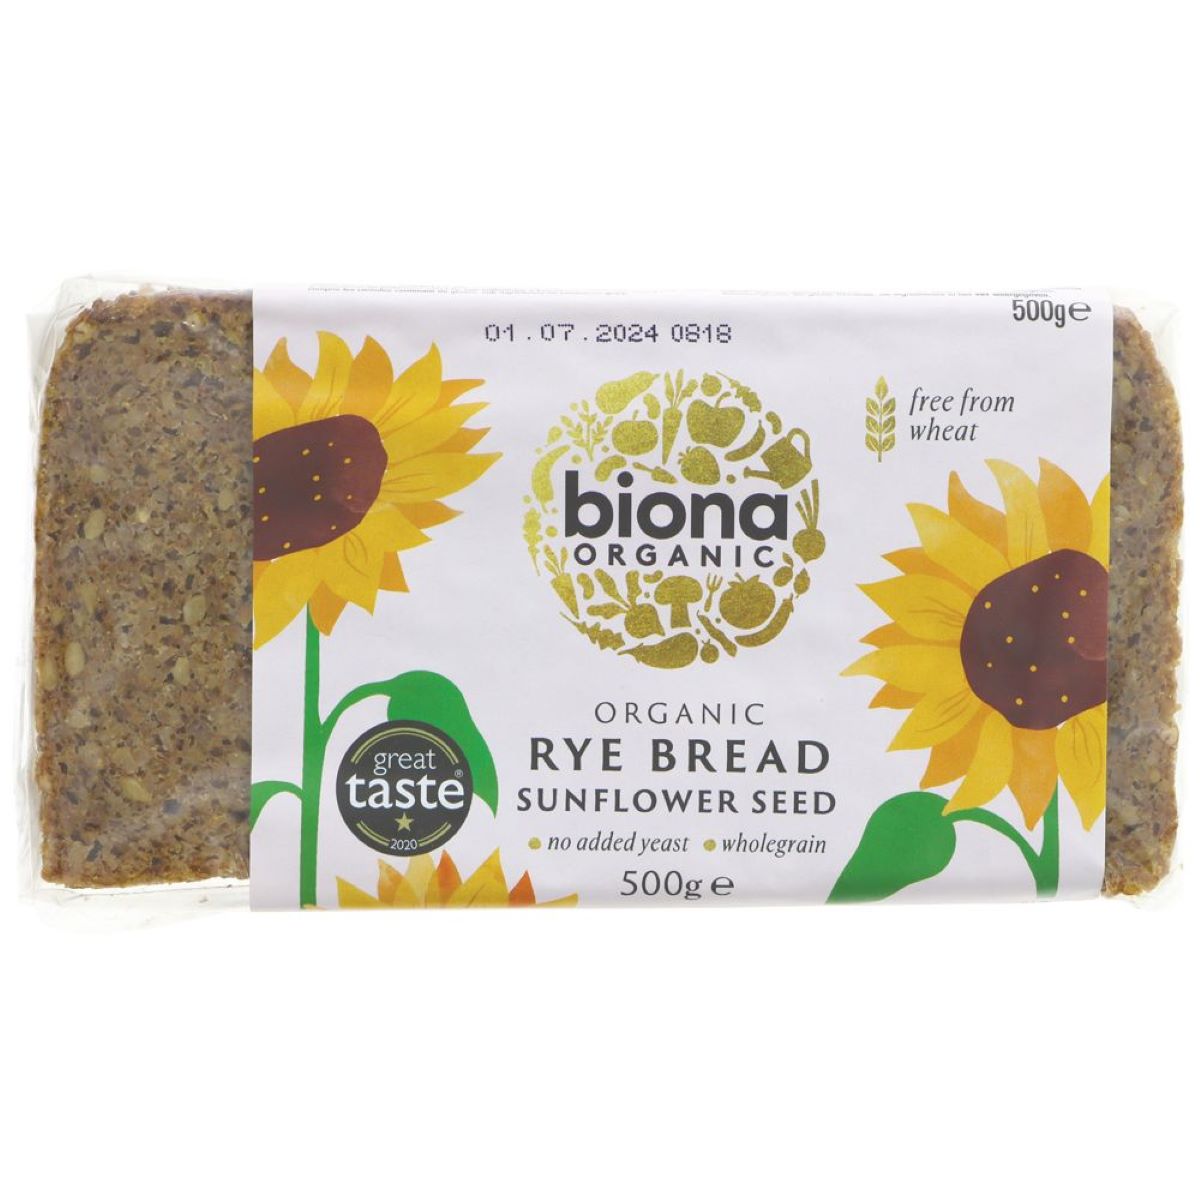 Biona Organic Rye Bread with Sunflower Seeds 500g